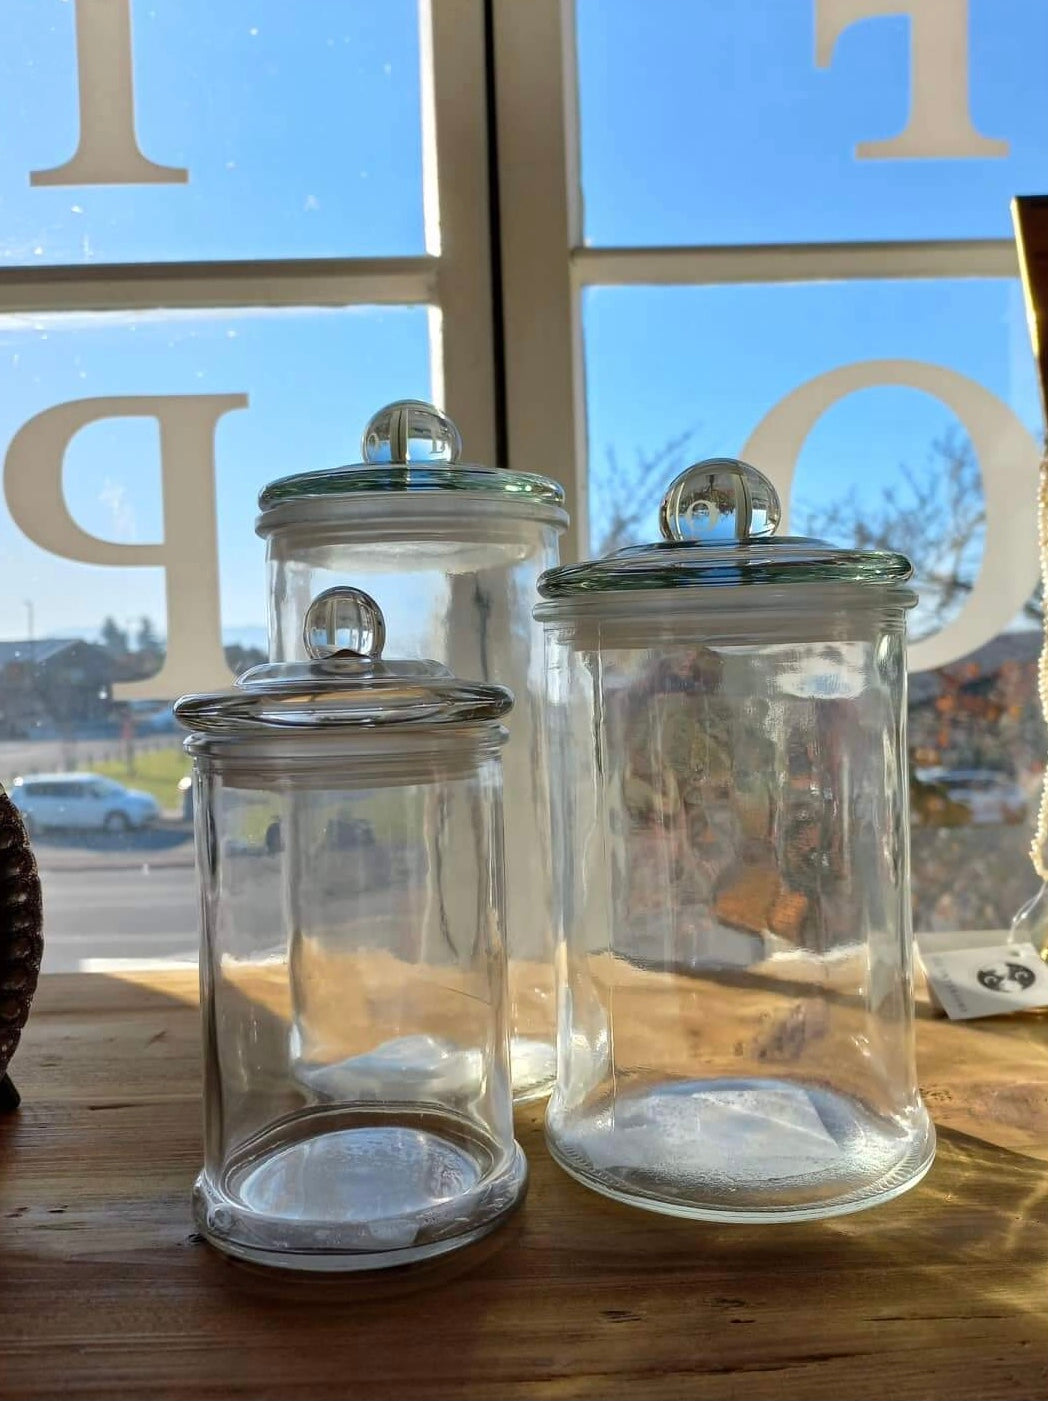 Le Monde - Small Glass Storage Jar